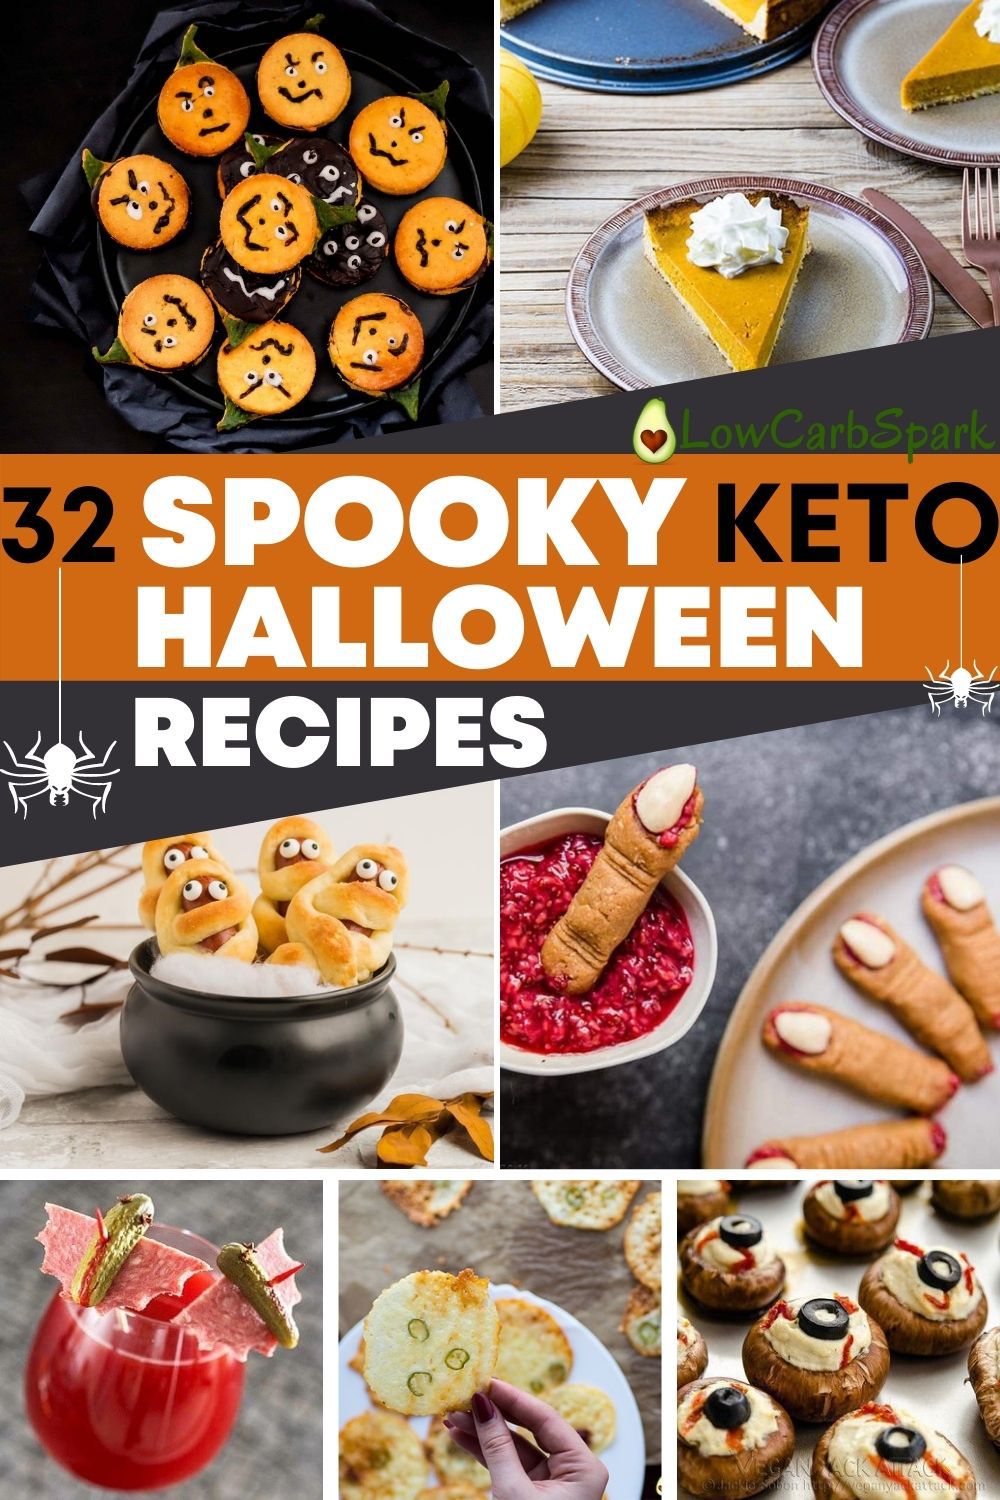 32 Spooky Keto Halloween Recipes - Fun Low Carb Halloween Ideas